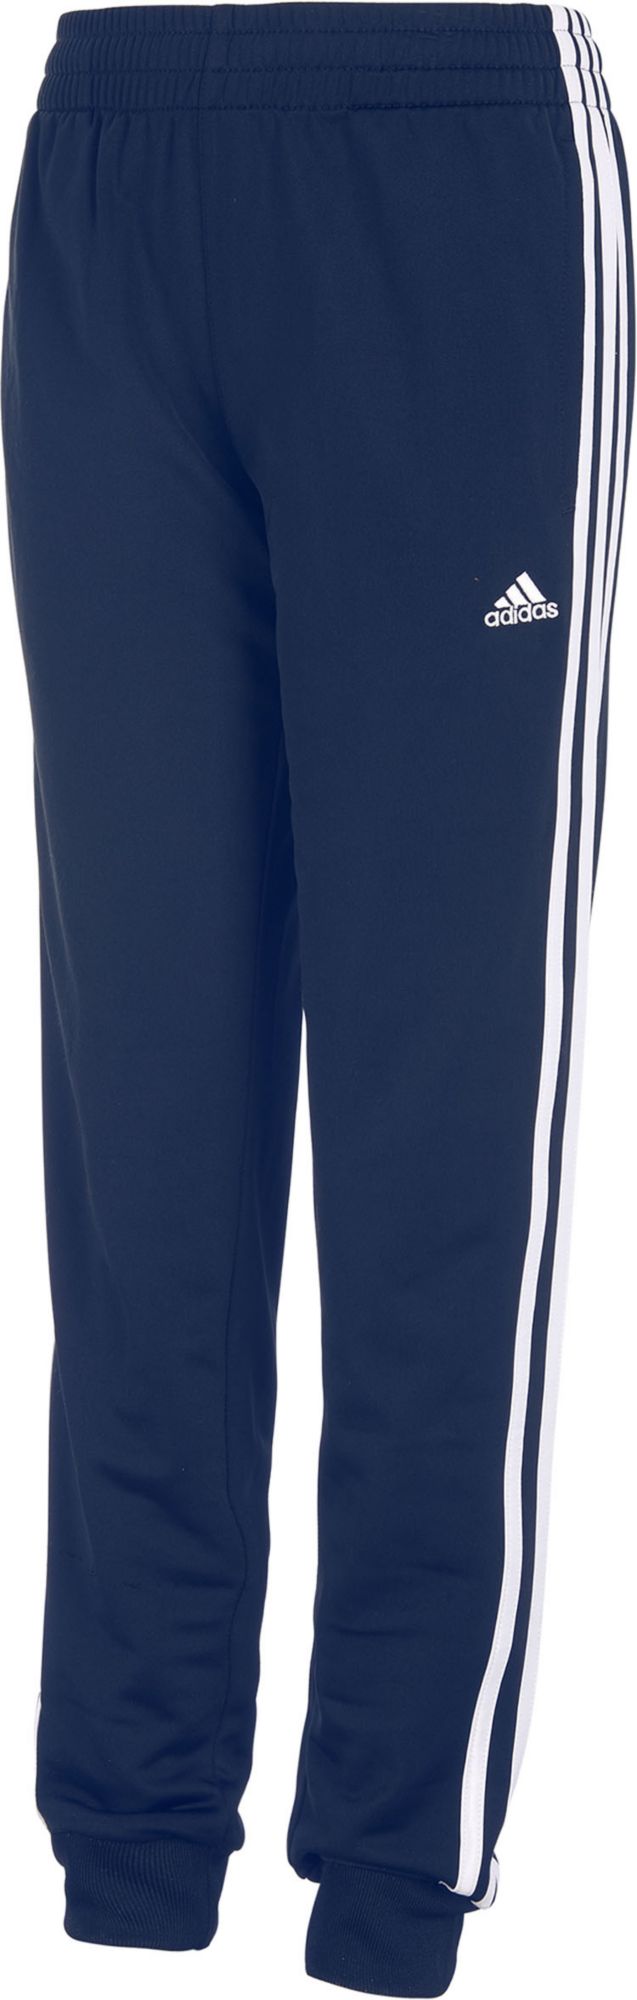 adidas joggers navy blue